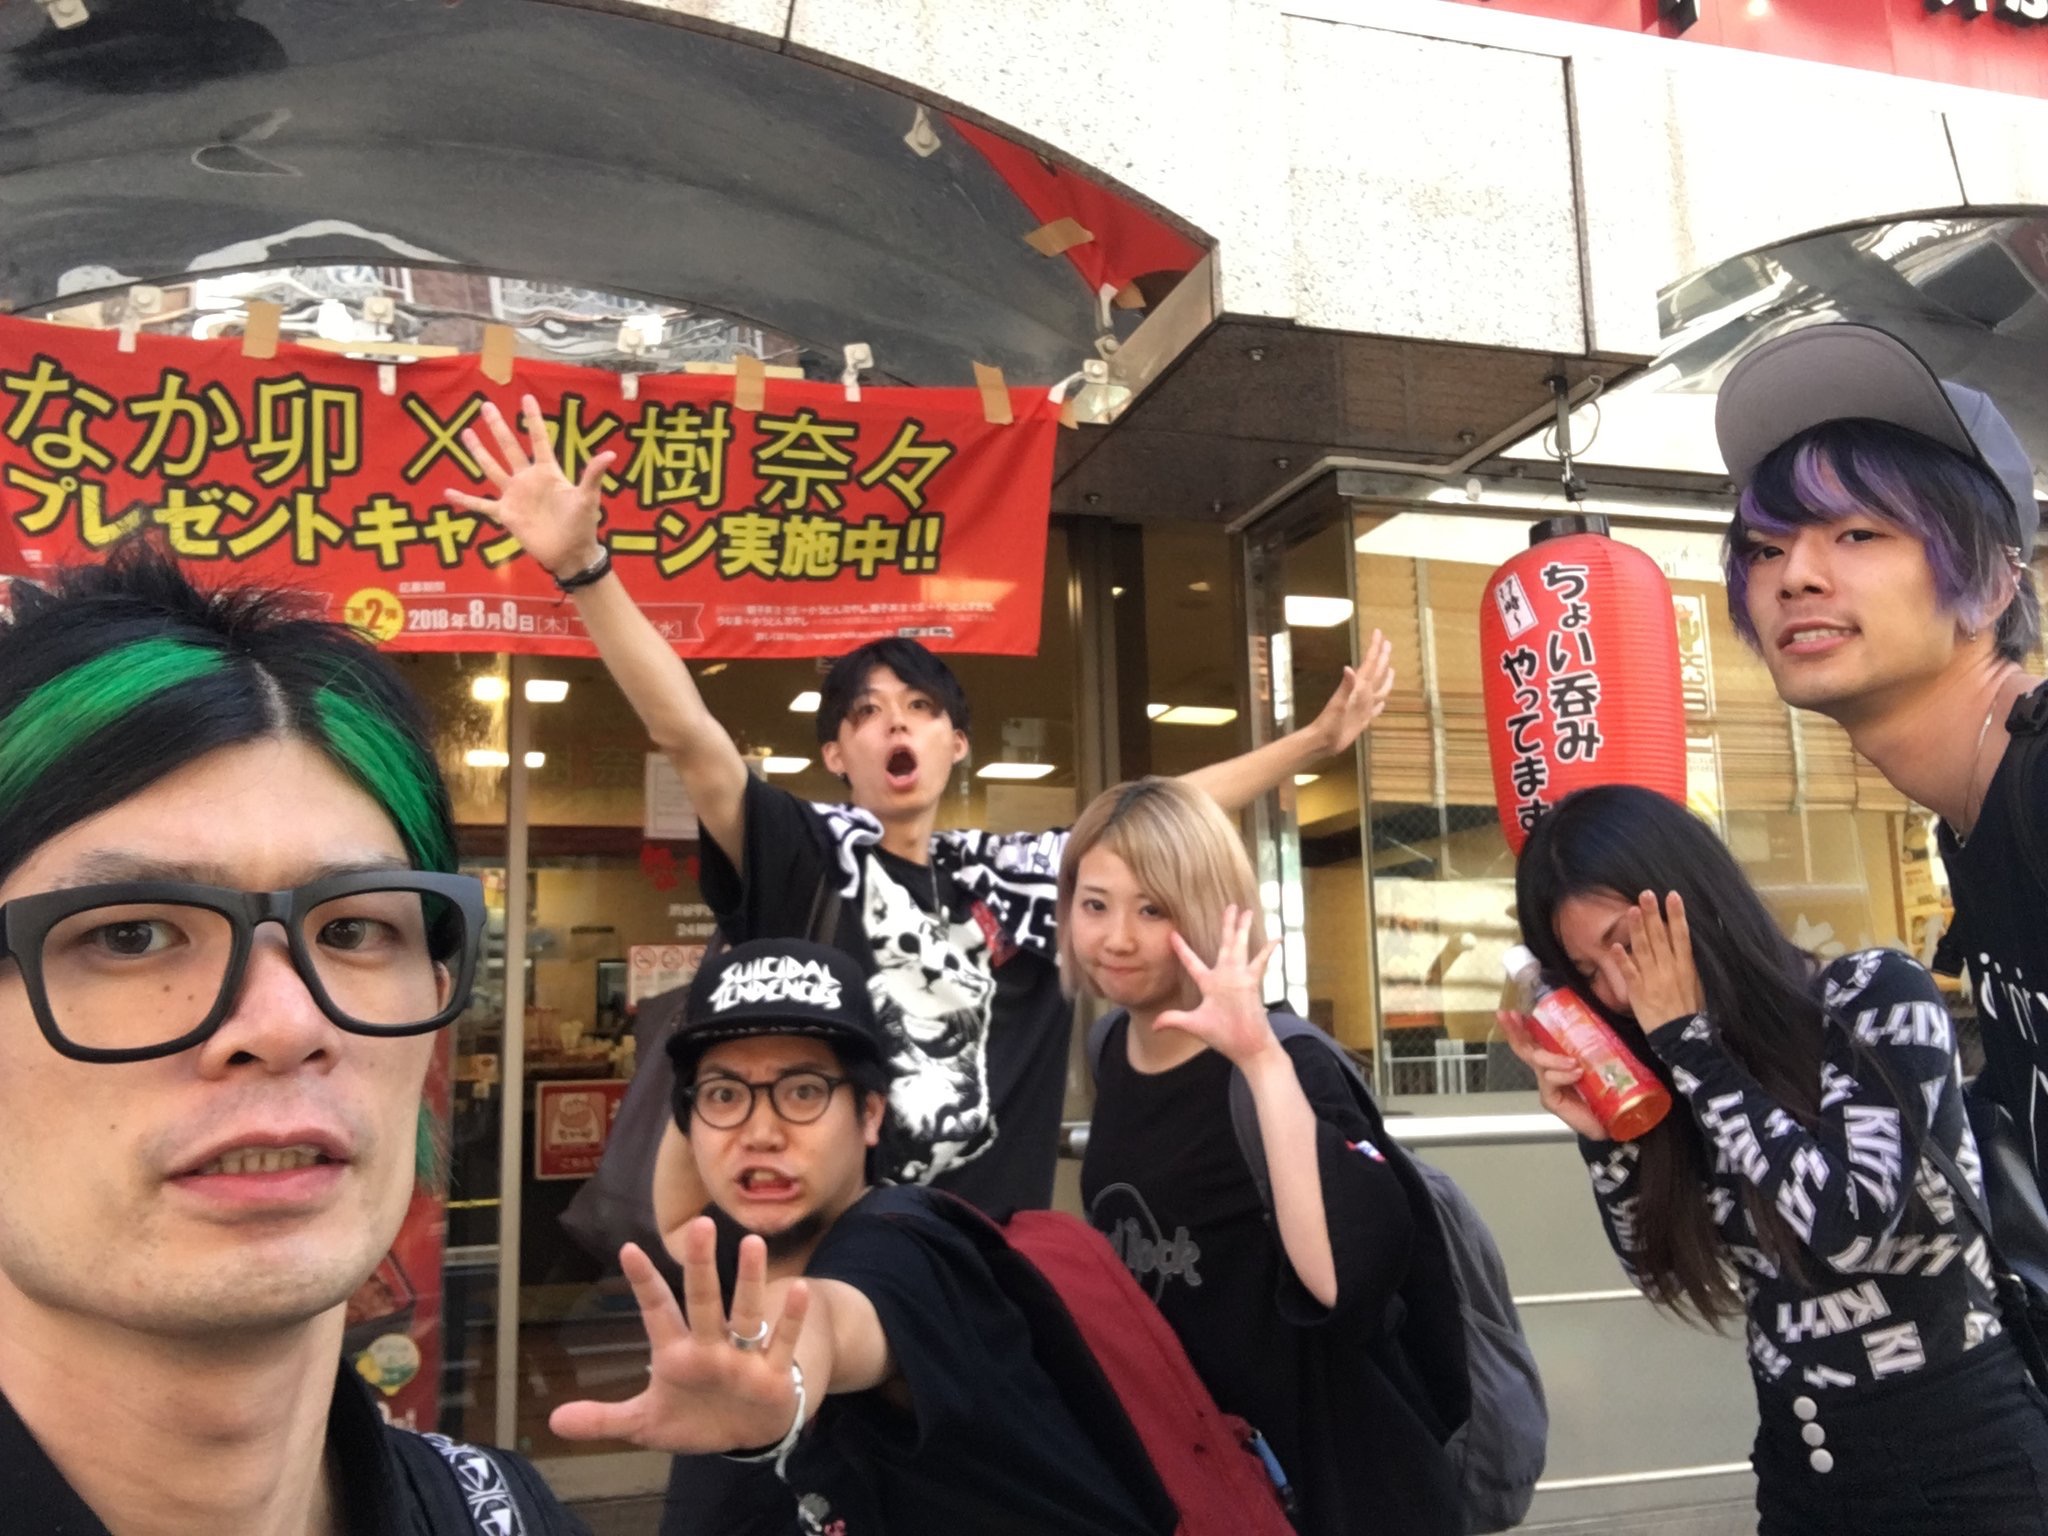 https://bar-rockaholic.jp/shibuya/blog/7074410A-D660-4596-8EAC-754D9CFB8AD7.jpeg